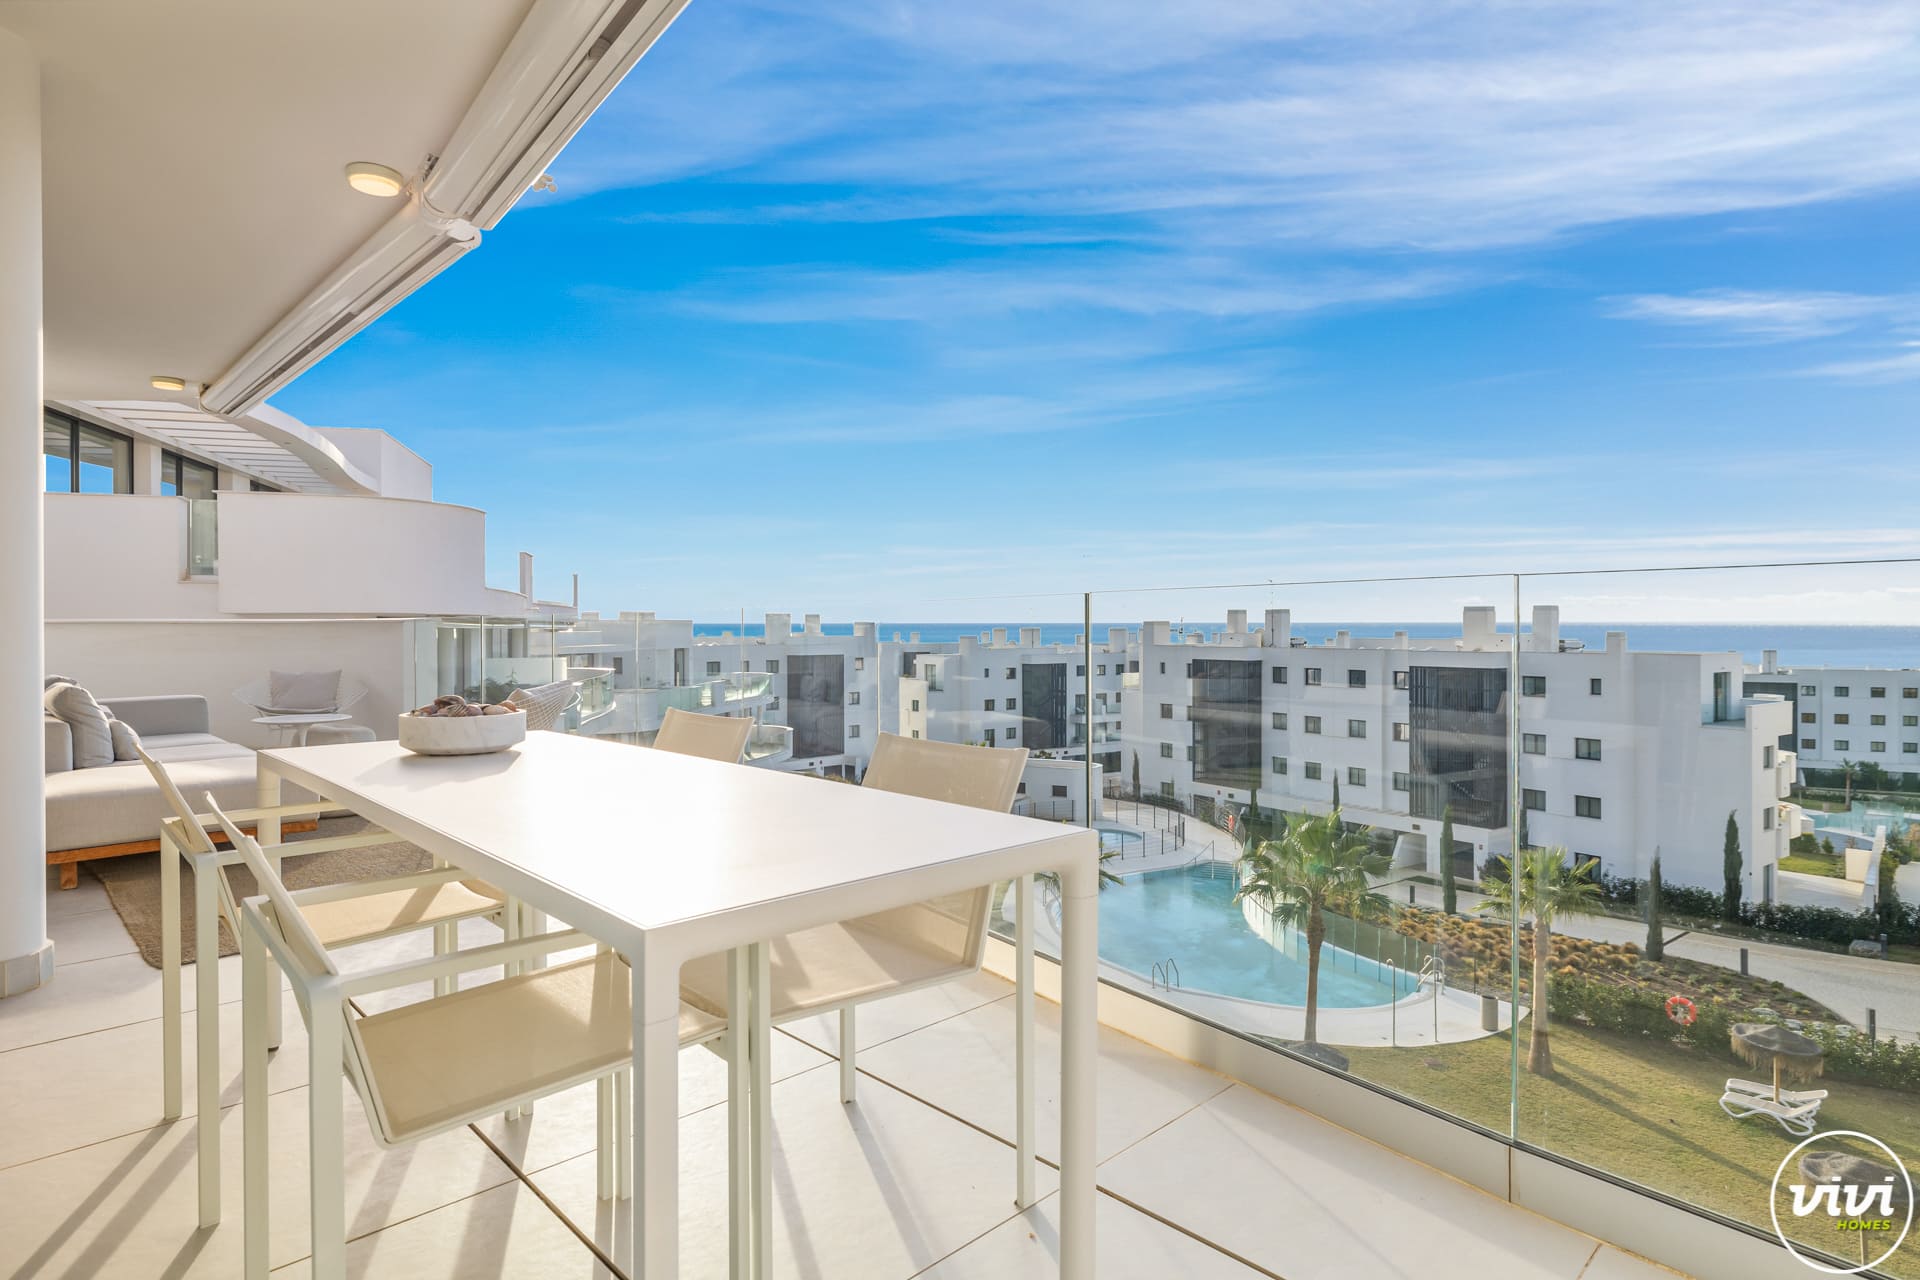 ViVi Real Estate: Un moderno apartamento de planta media con balcón con vistas al océano.